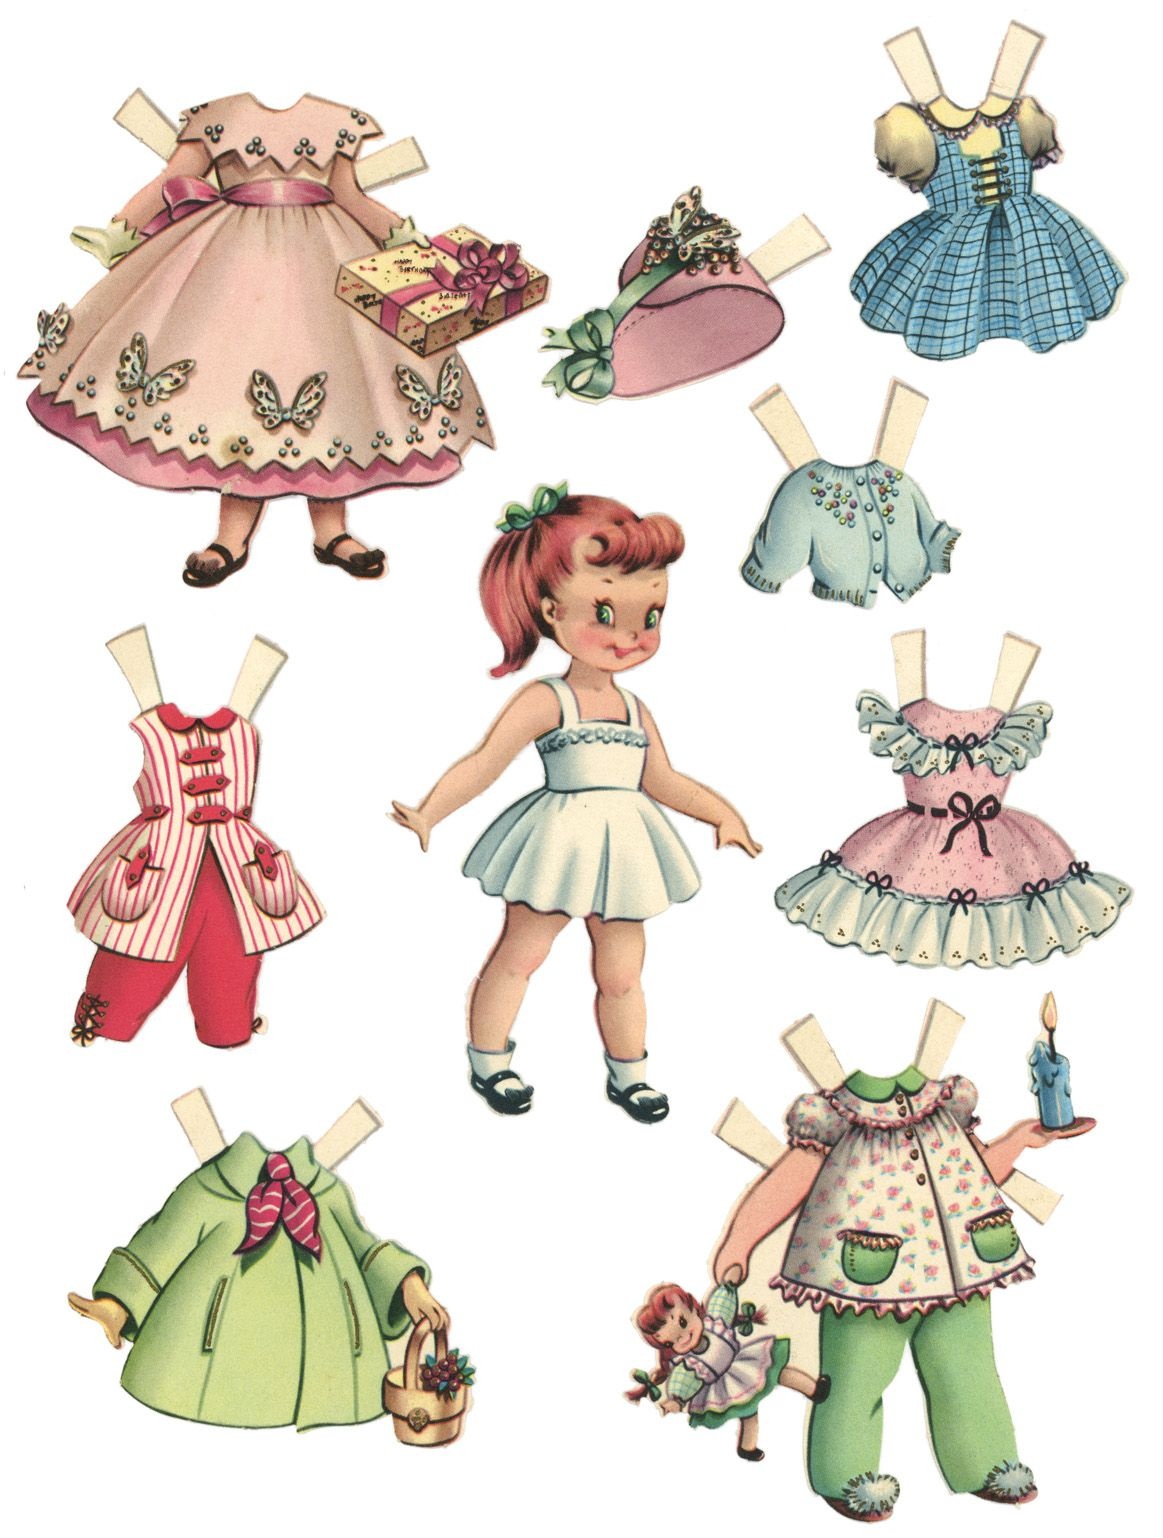 10 Free Printable Paper Dolls | Paper Dolls | Paper Dolls Printable - Free Printable Paper Dolls